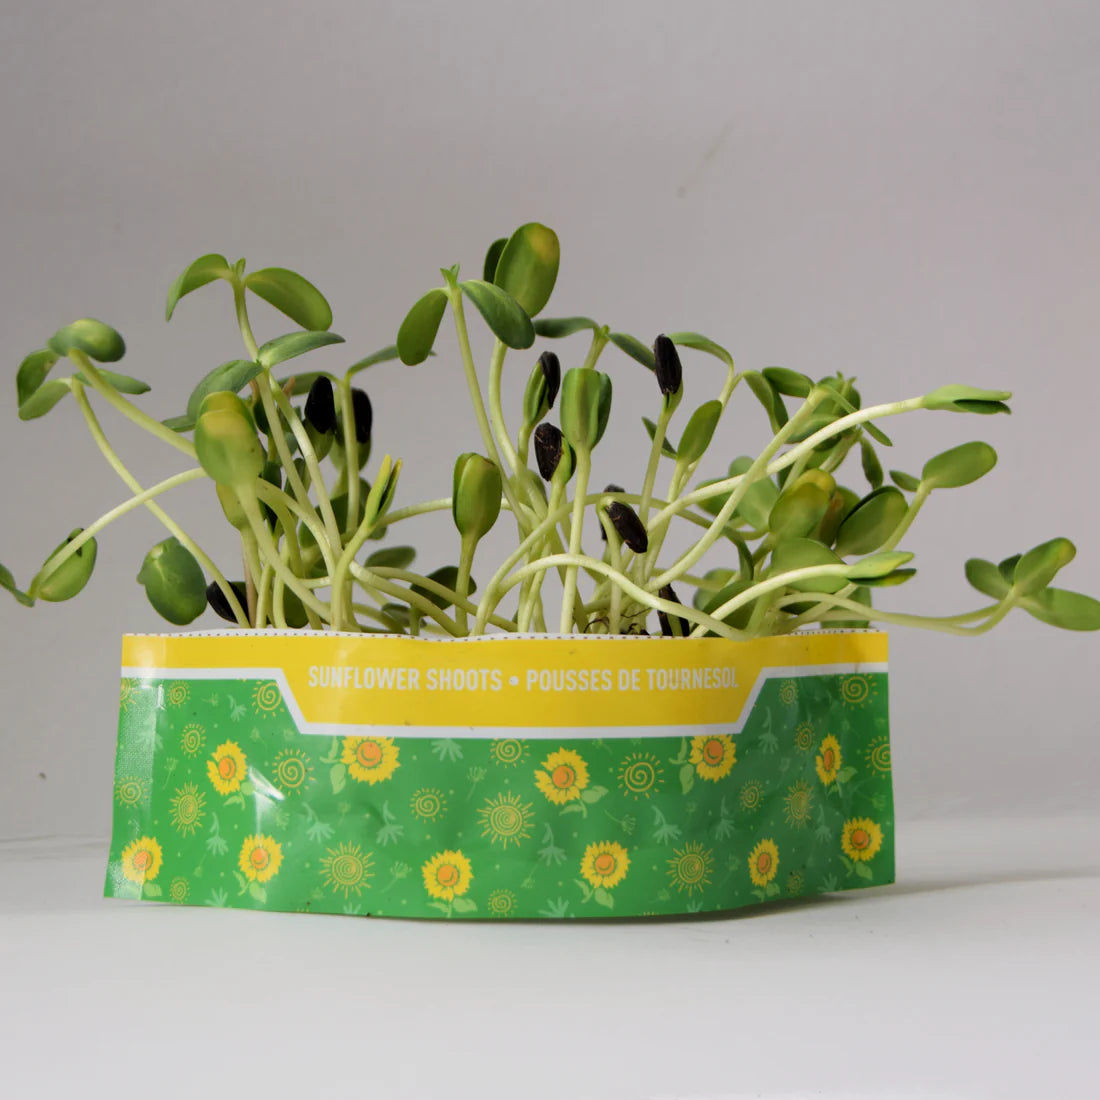 Micro Garden Microgreens Kit Bundle - ALL 7 varieties